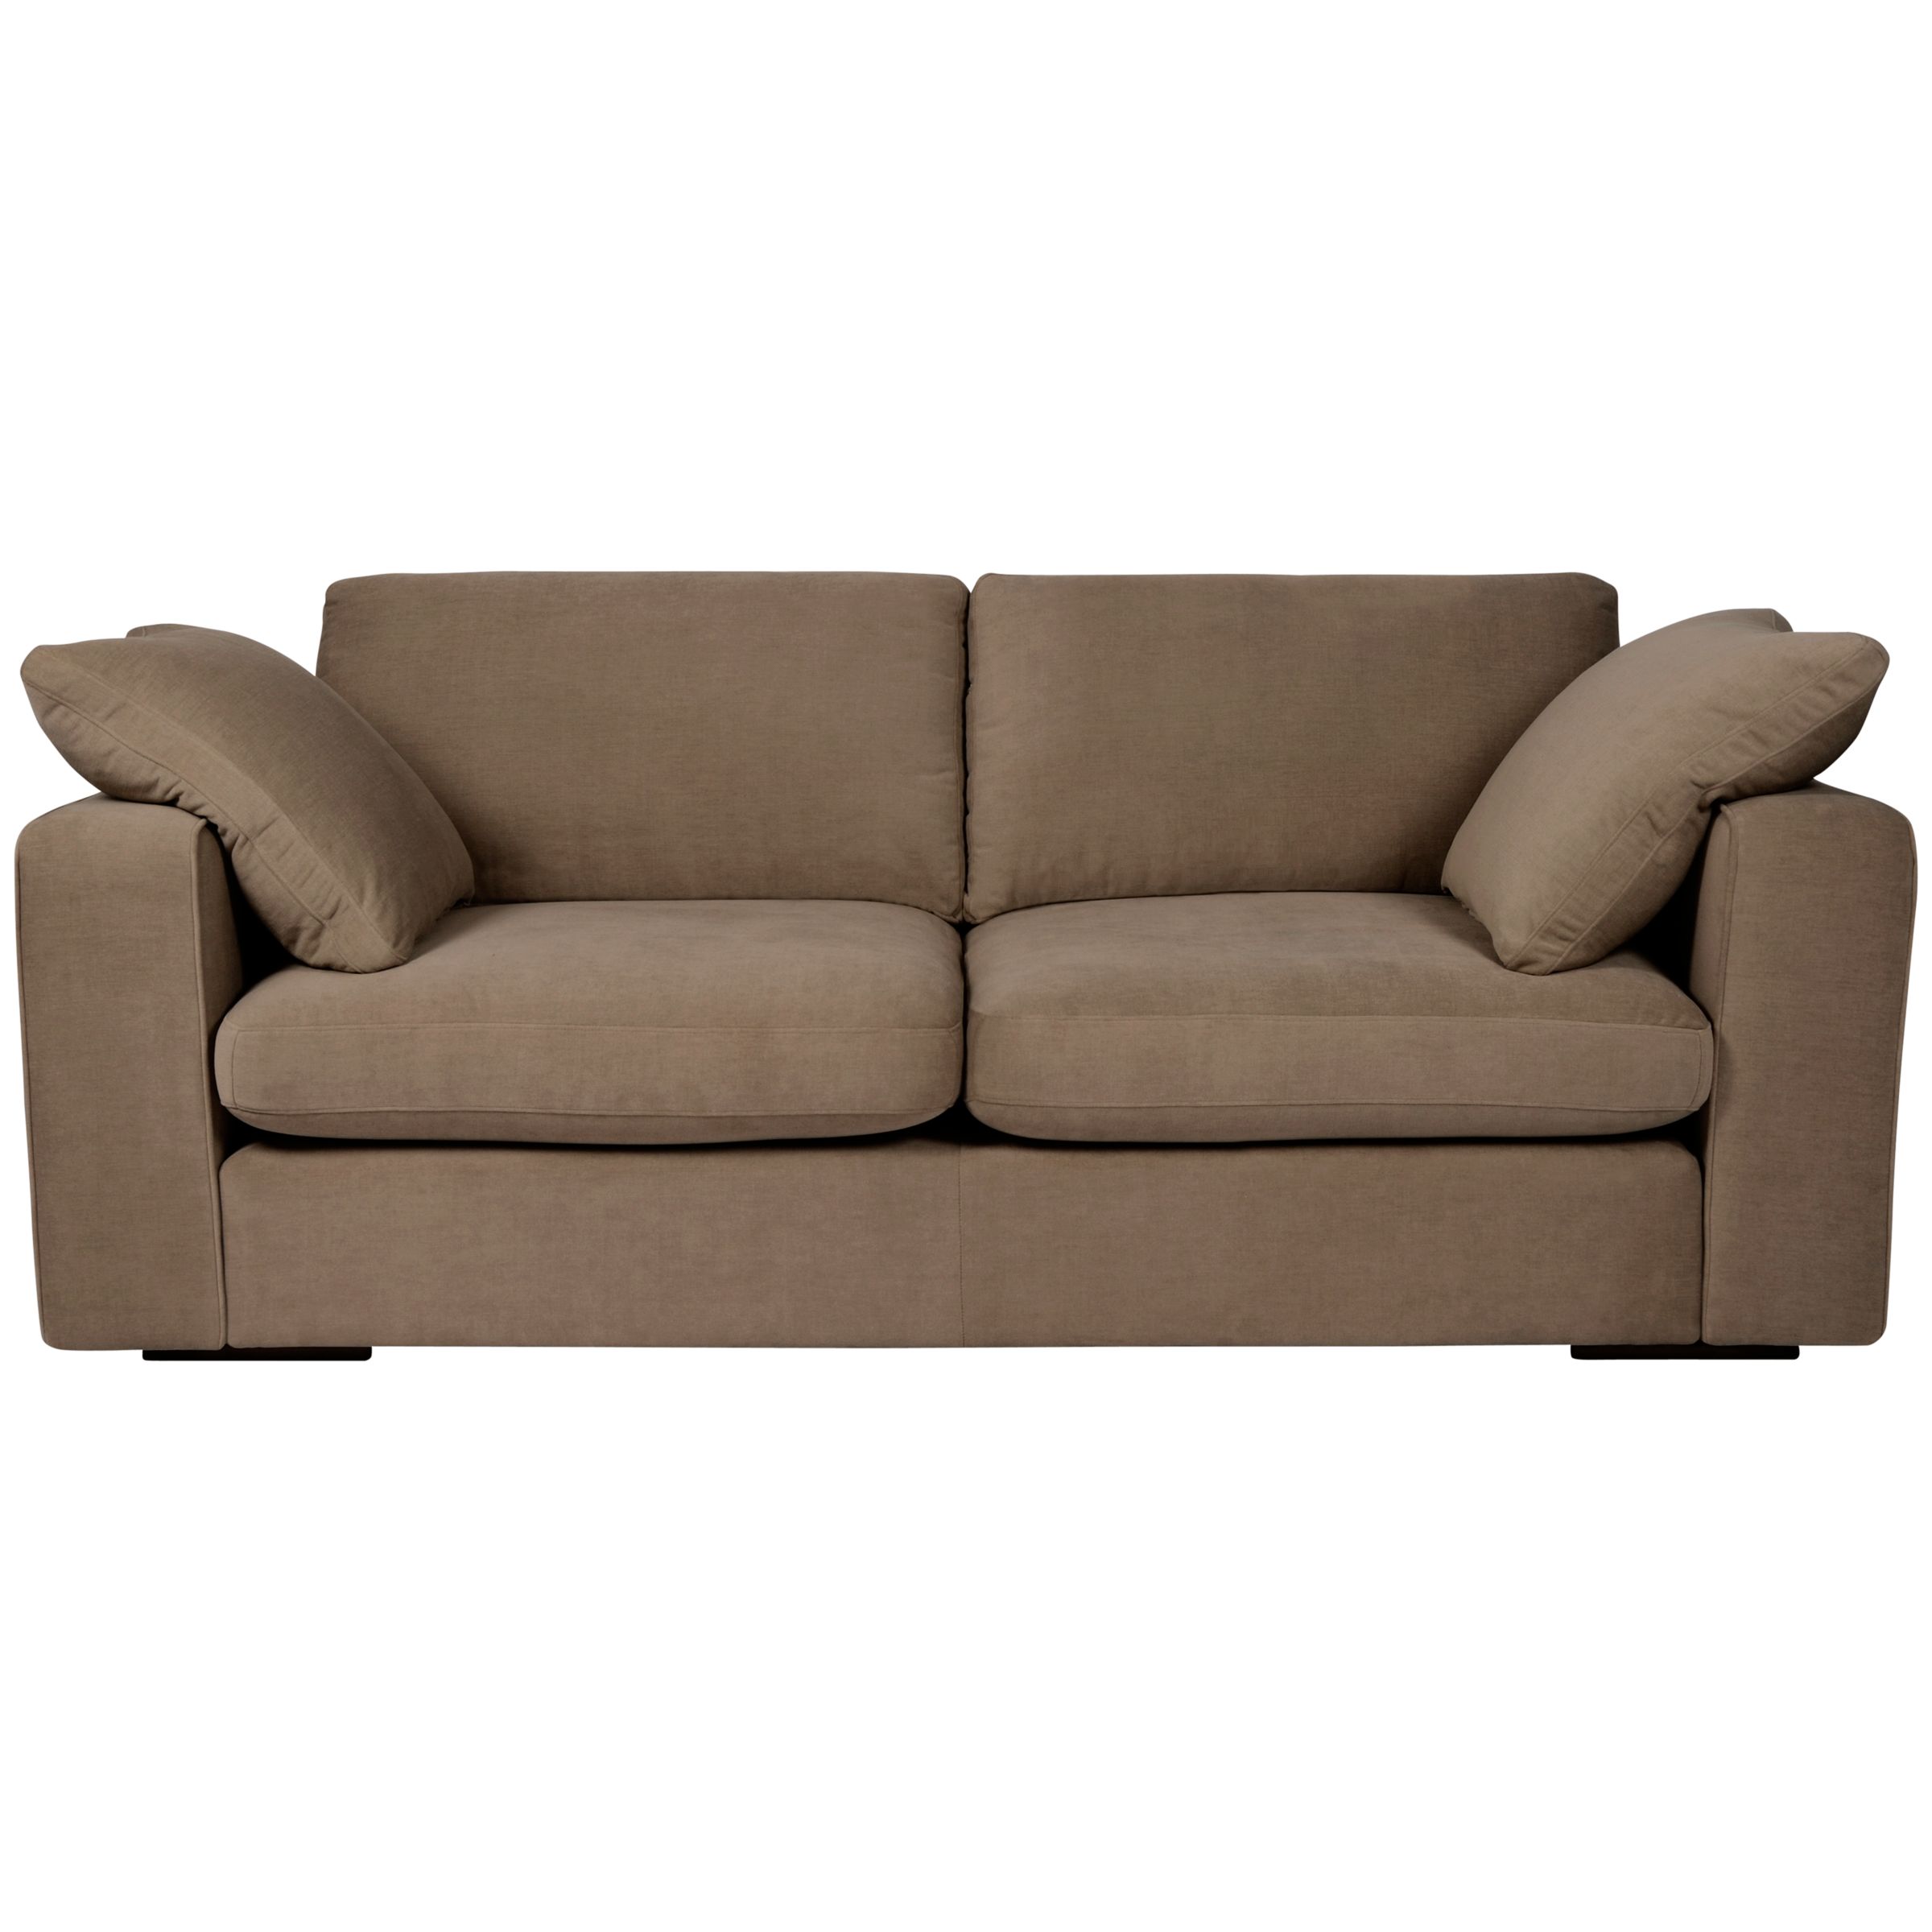 John Lewis Jones Options 2 Square Arm Large Sofa, Bark, width 208cm